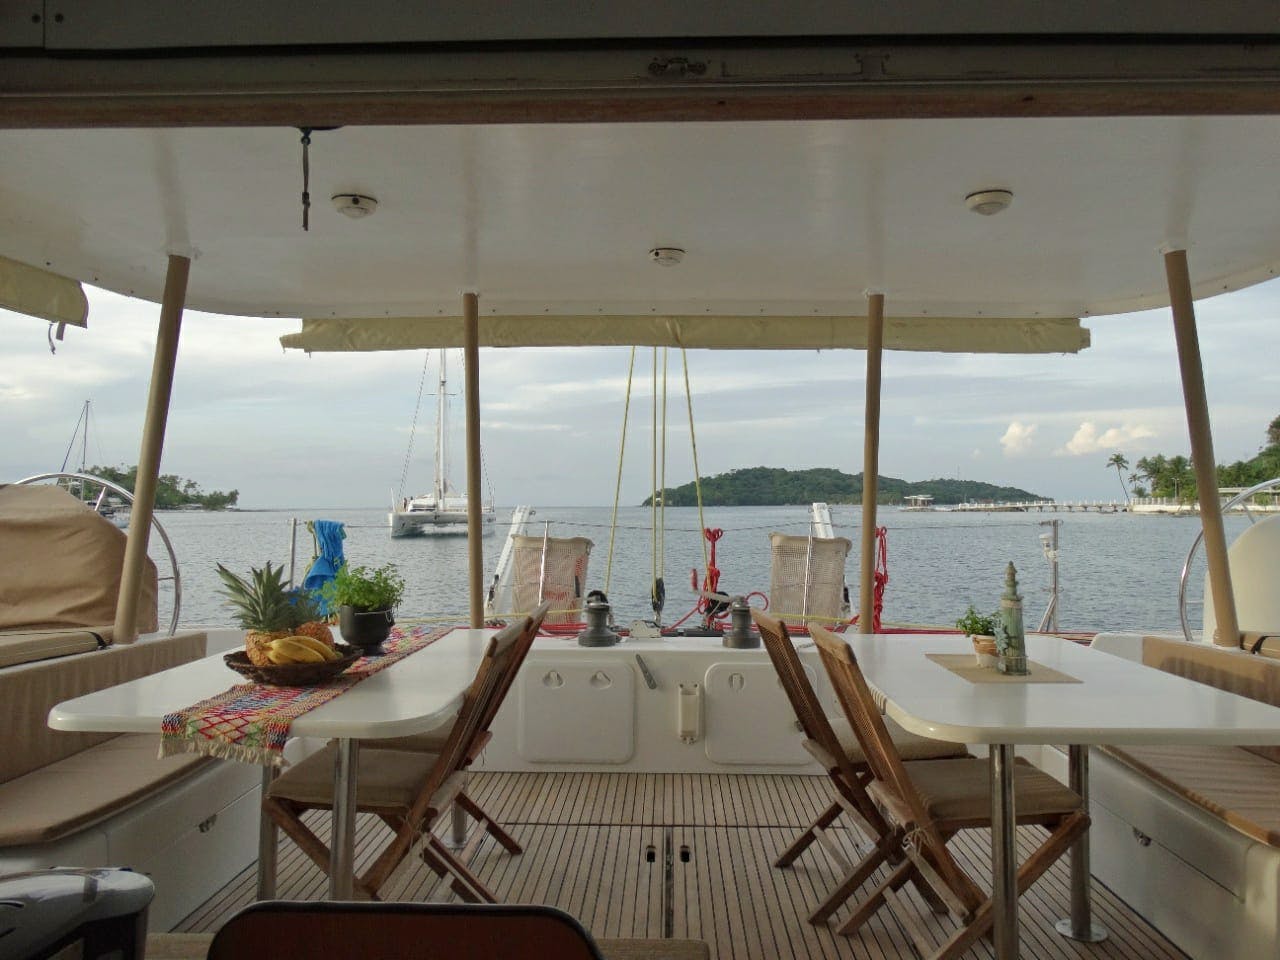 Book Lagoon 570 Catamaran for bareboat charter in San Blas, Corazon de Jesus, San Blas, Panama with TripYacht!, picture 8